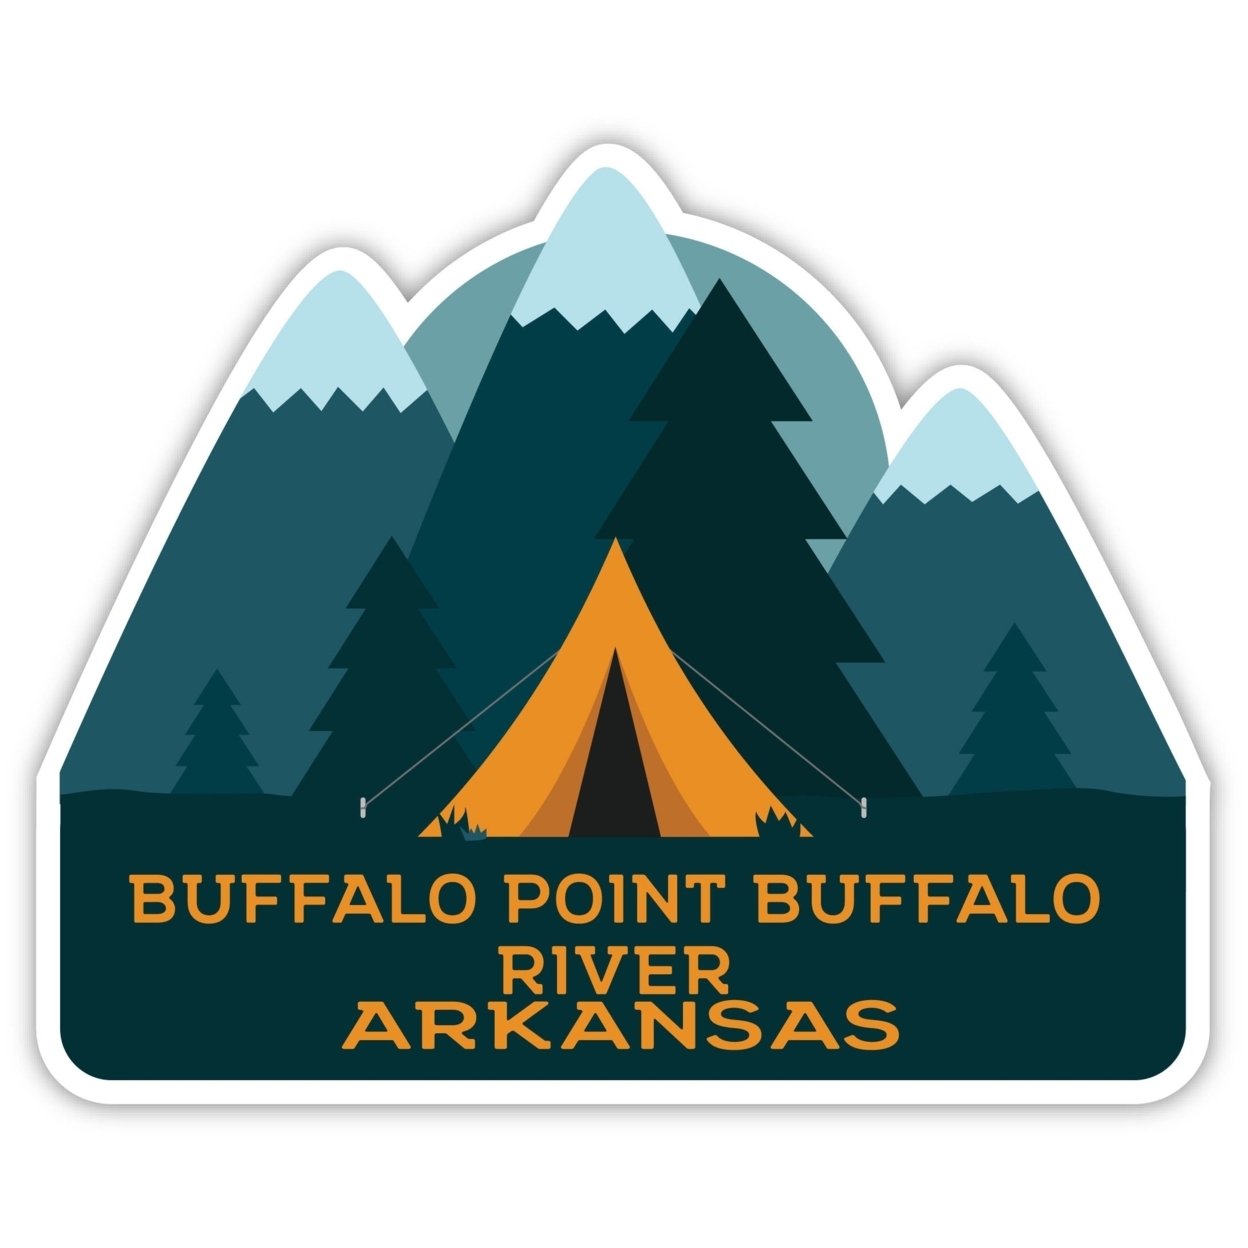 Buffalo Point Buffalo River Arkansas Souvenir Decorative Stickers (Choose Theme And Size) - 4-Pack, 10-Inch, Camp Life